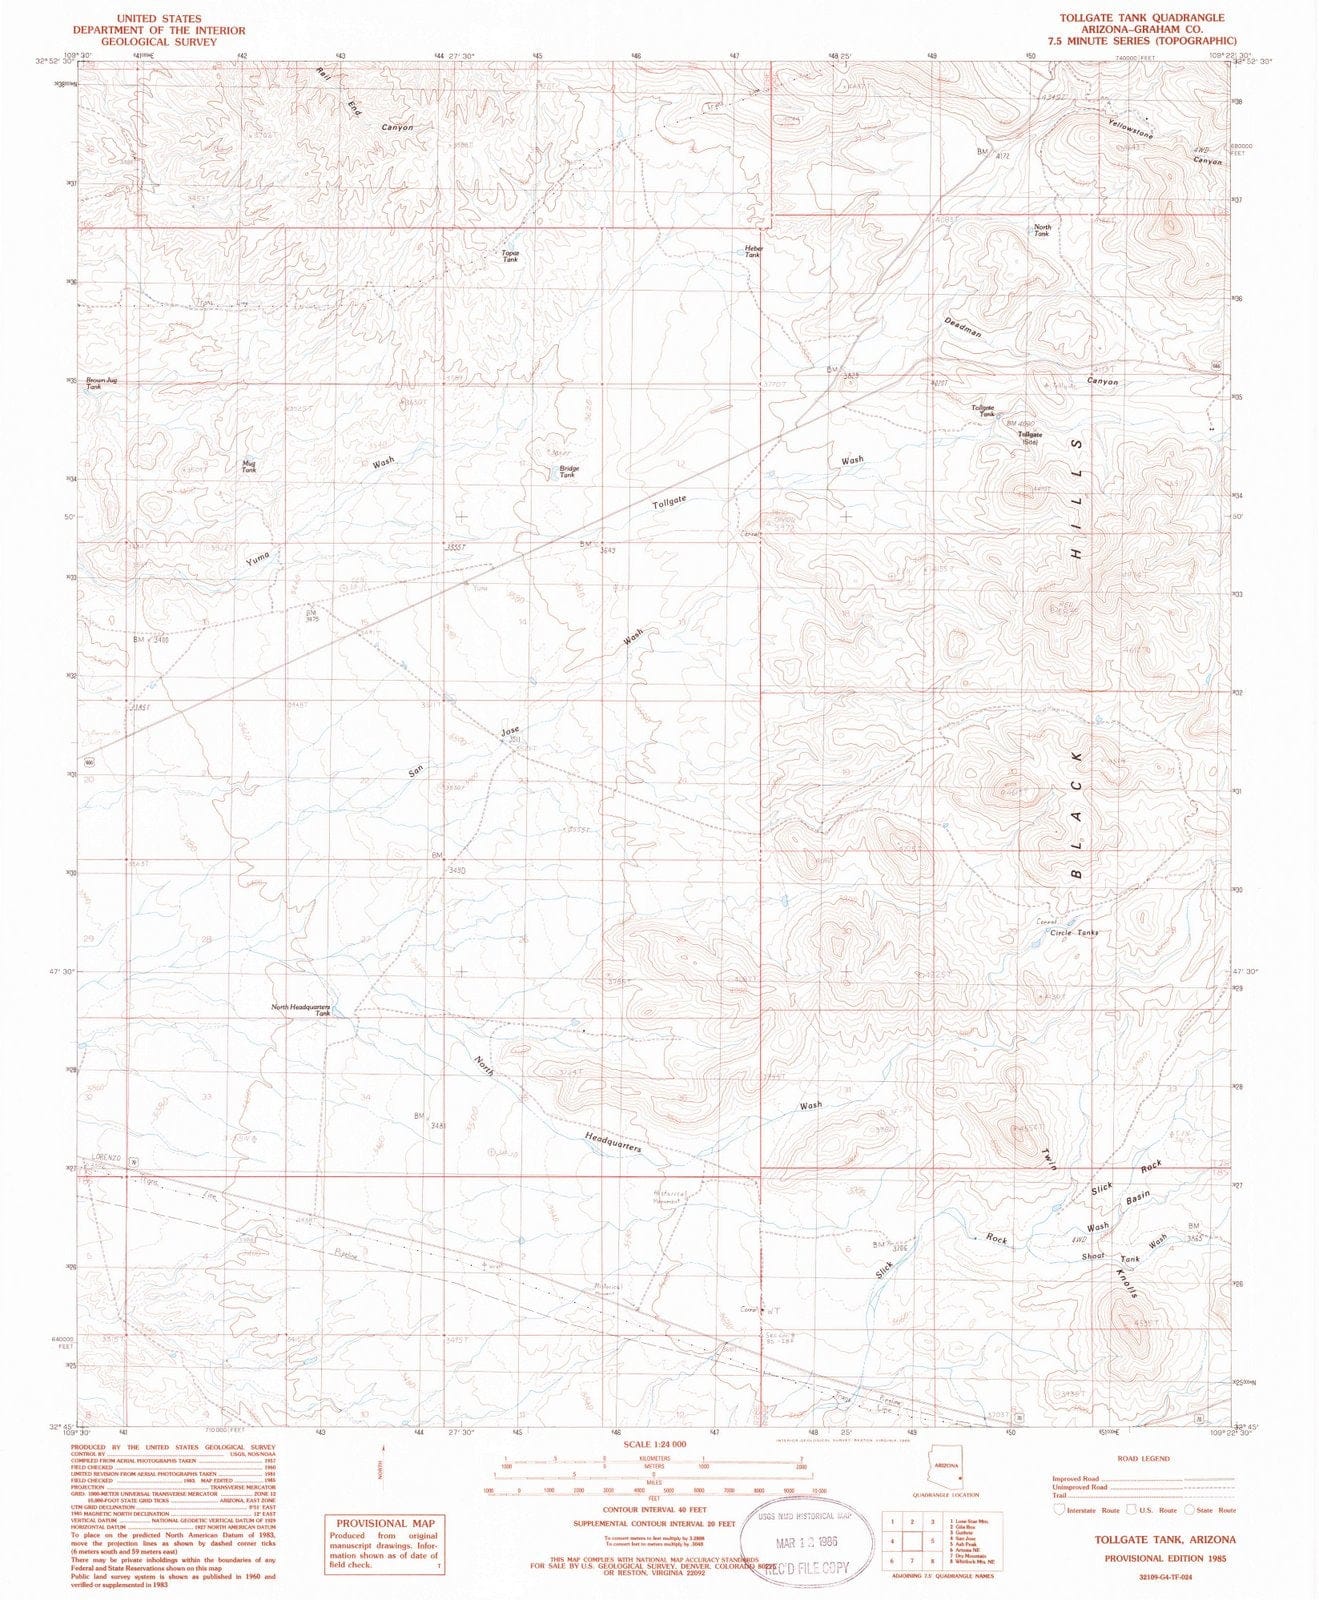 1985 Tollgate Tank, AZ - Arizona - USGS Topographic Map